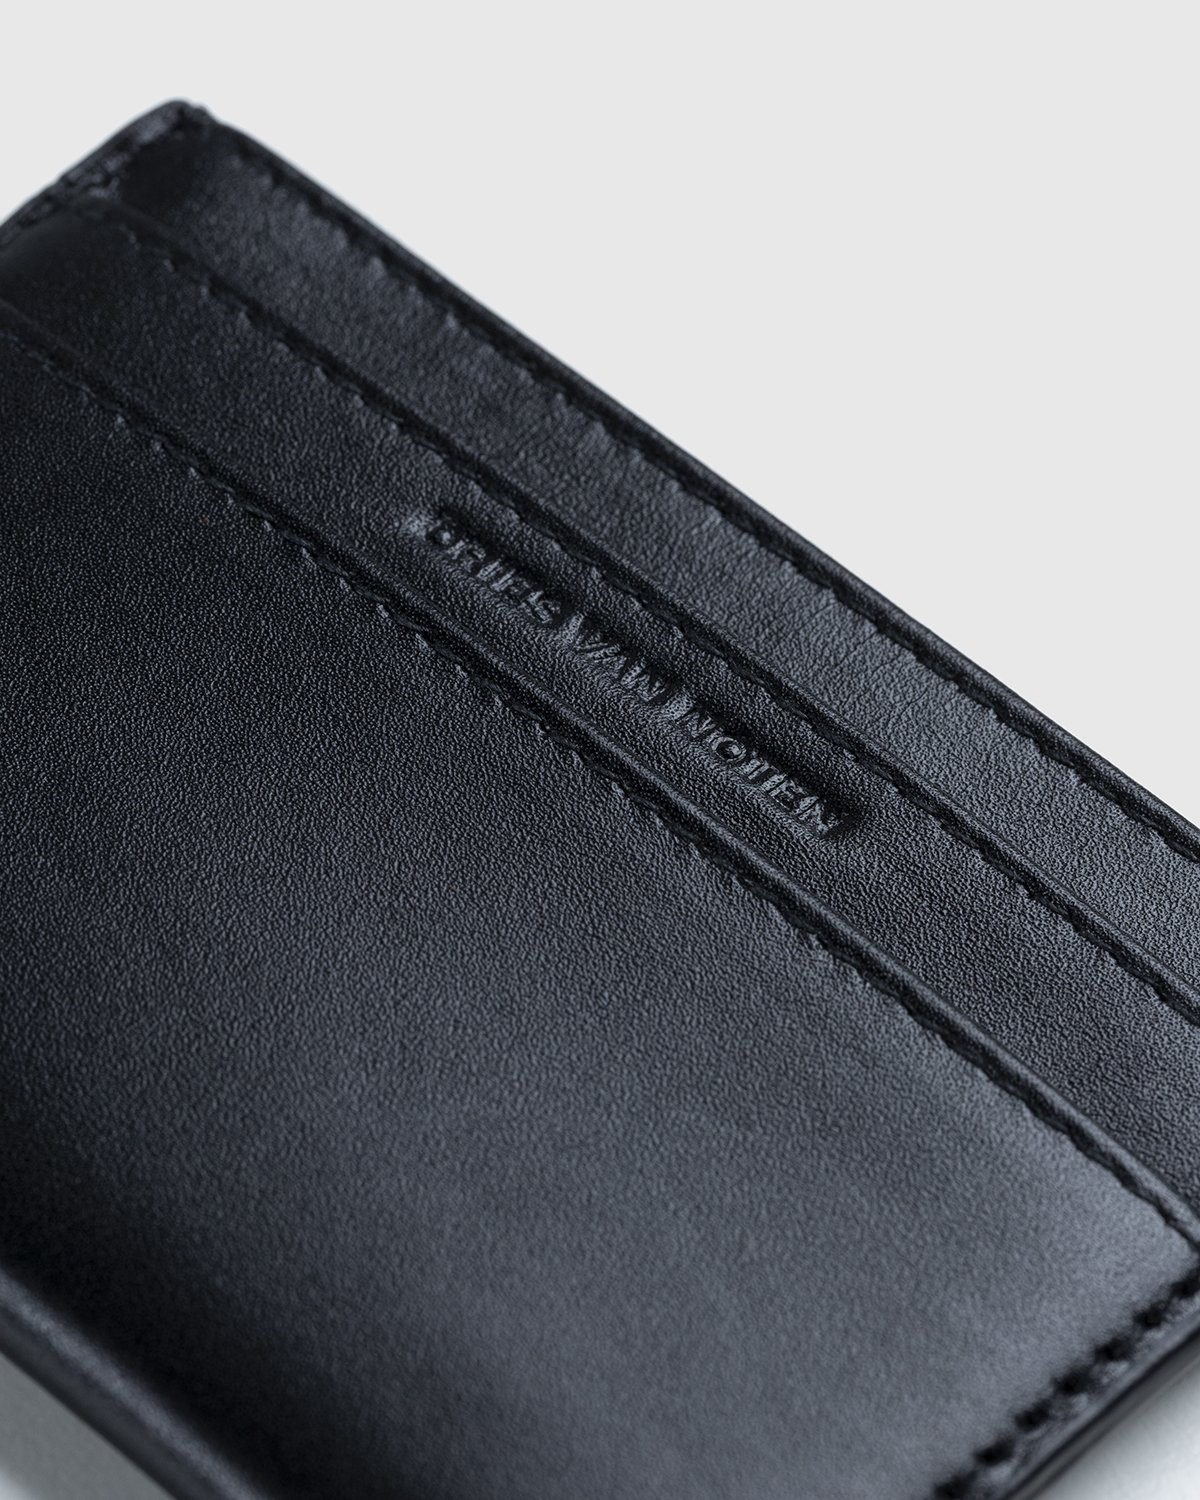 Dries van Noten - Leather Card Holder Black - Accessories - Black - Image 3